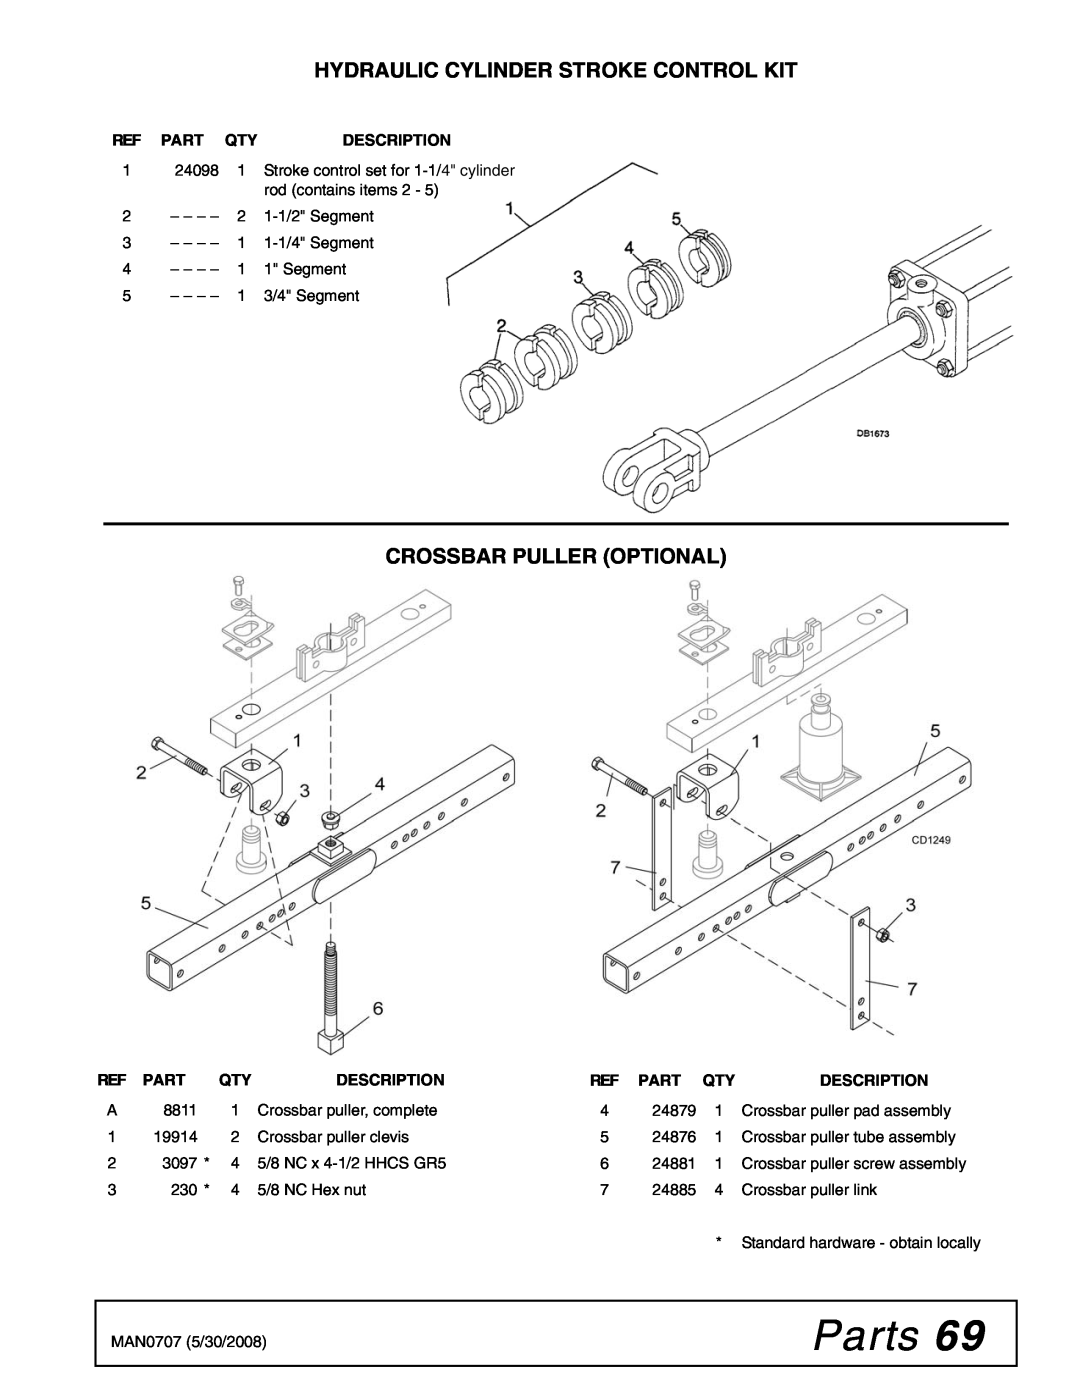 Woods Equipment BW126-3, BW180Q-3 manual Parts, Crossbar Puller Optional, Hydraulic Cylinder Stroke Control Kit, Description 